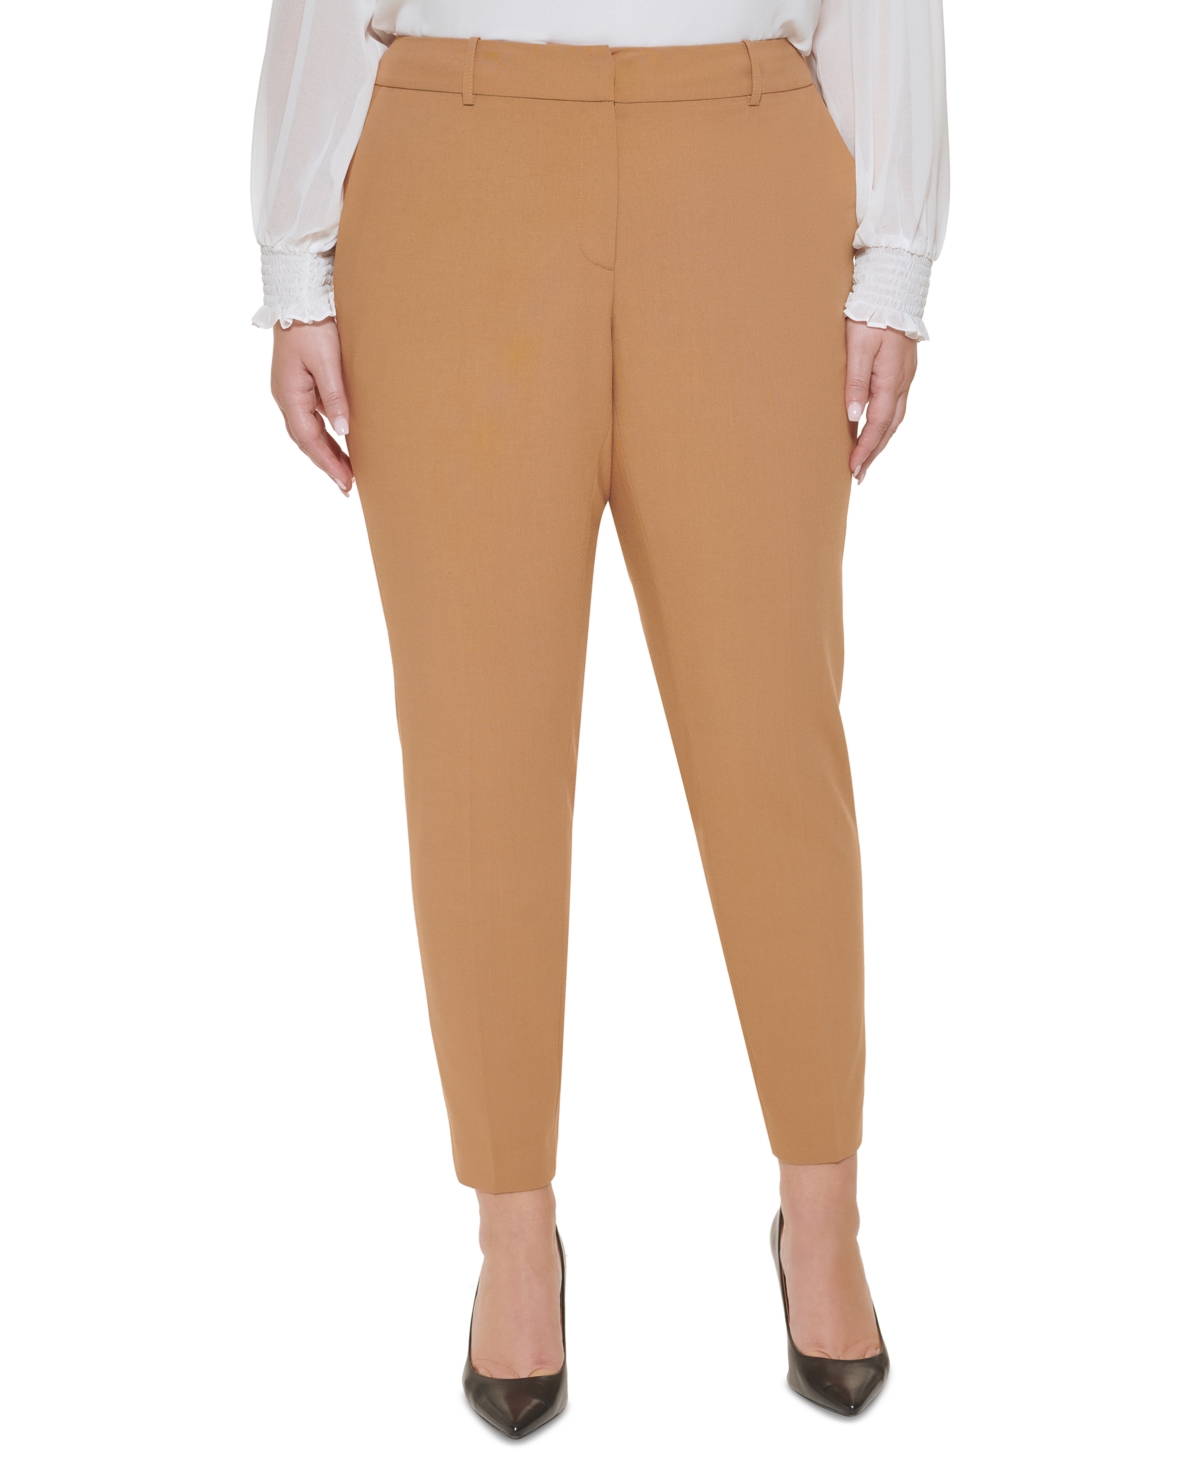 Calvin Klein Women's Plus Office Wear Slim Leg Dress Pants Brown Size 20W